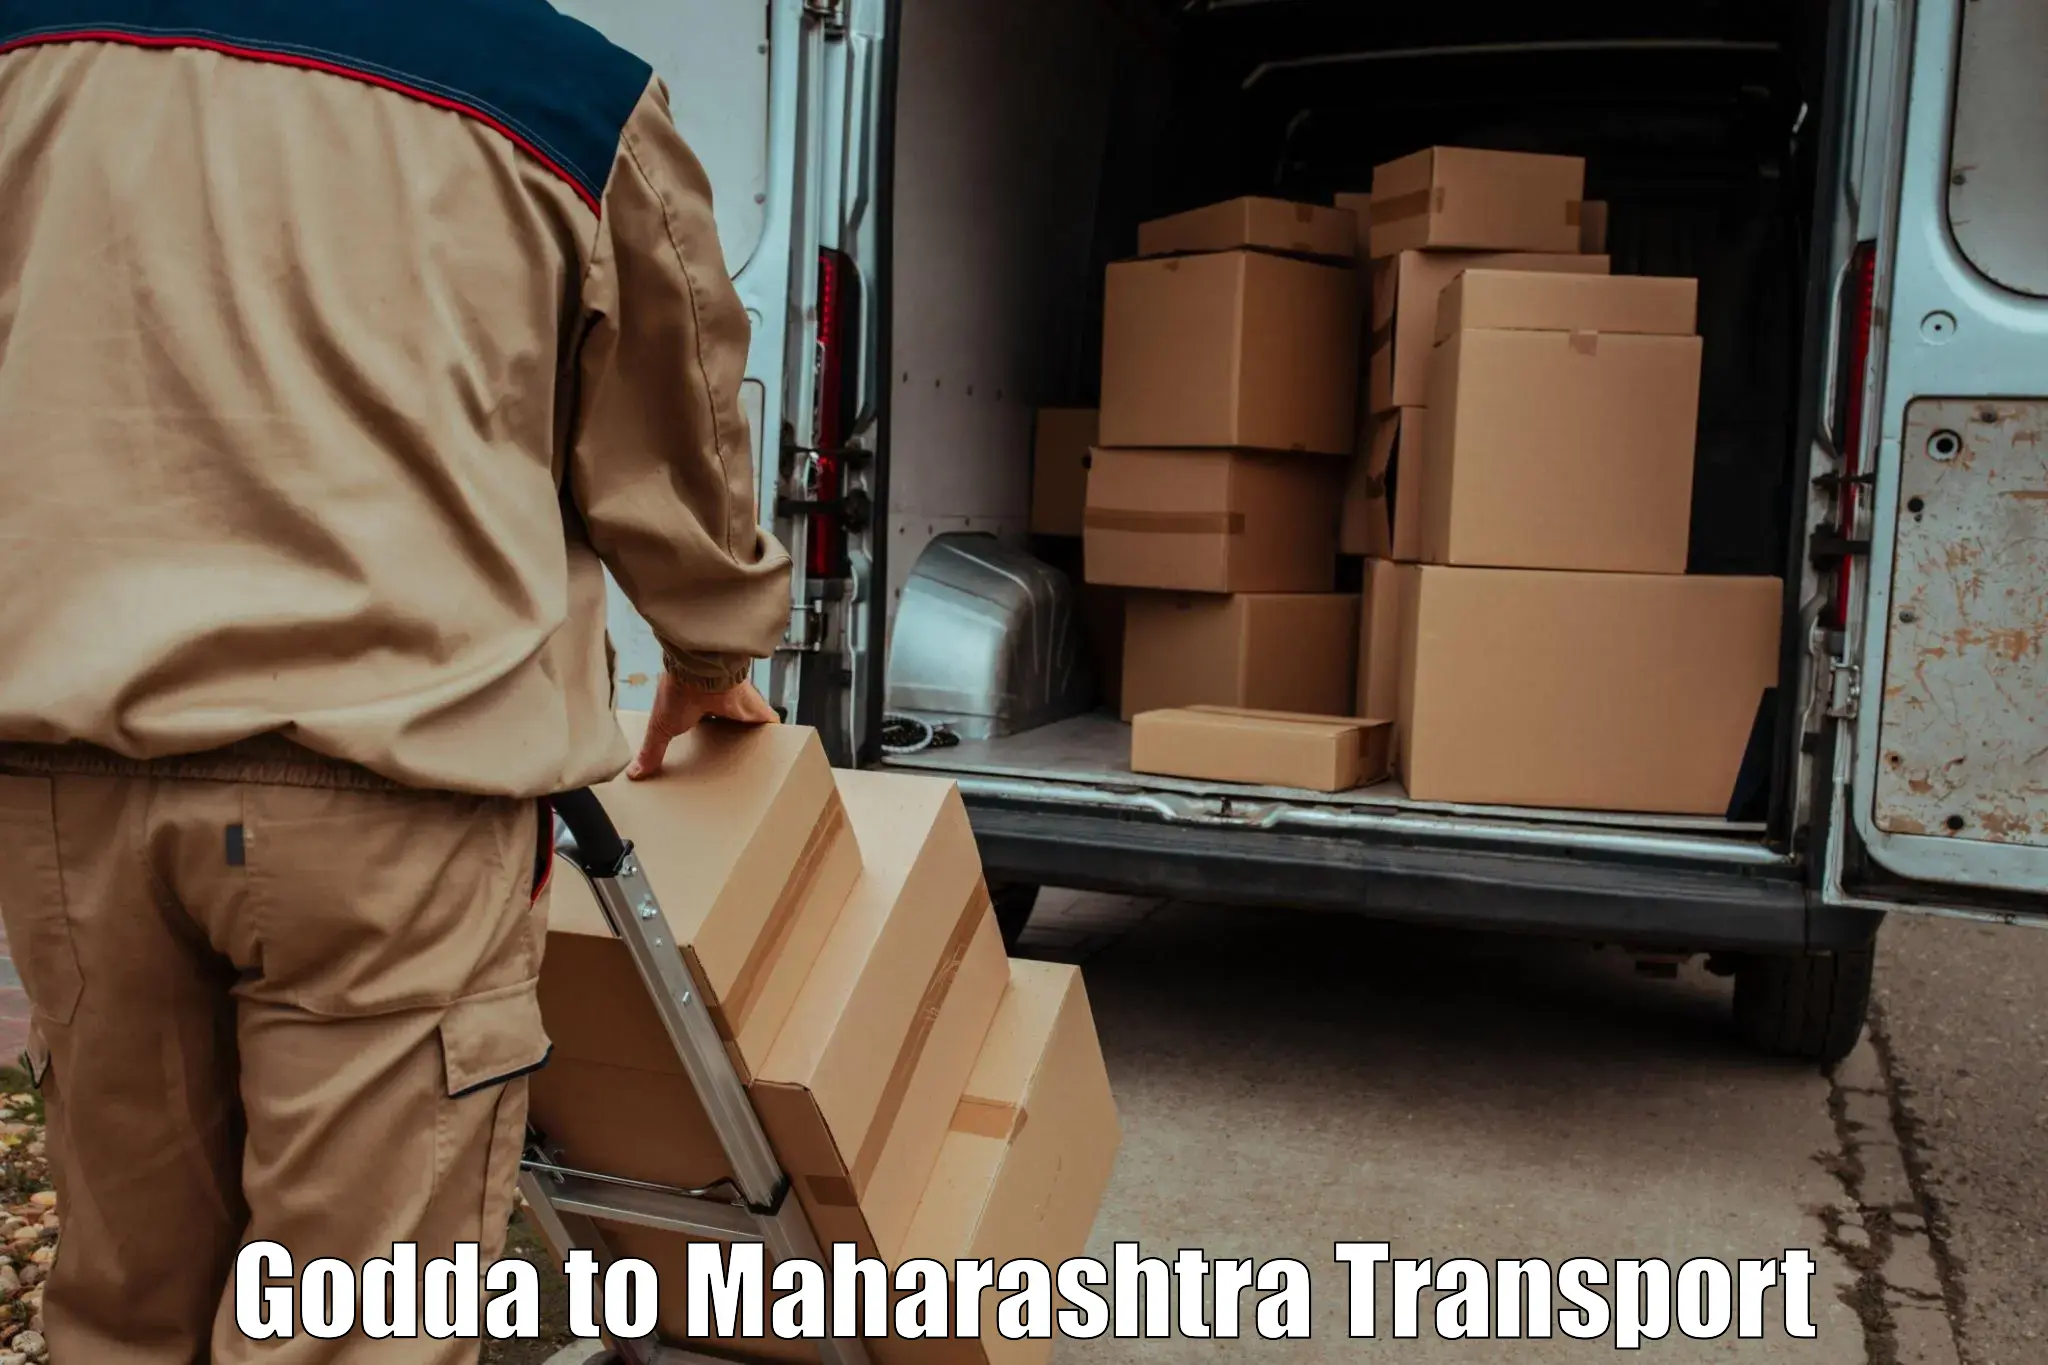 Cycle transportation service Godda to Tata Institute of Social Sciences Mumbai